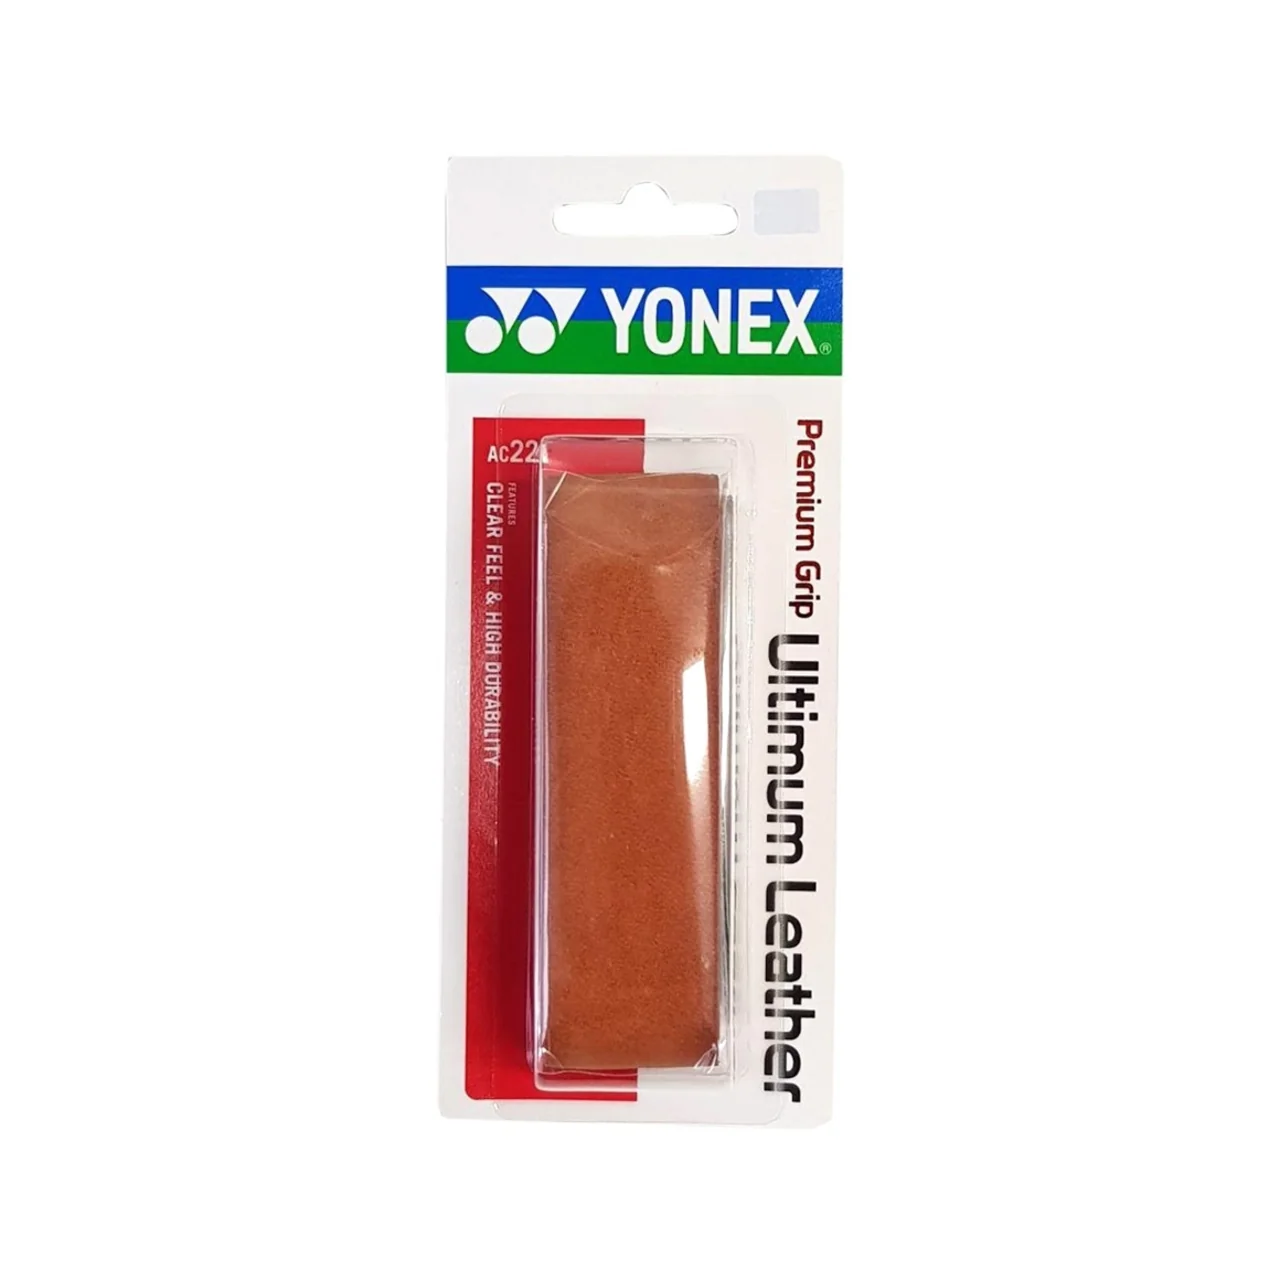 Yonex Geniune Leather Grip Tennis